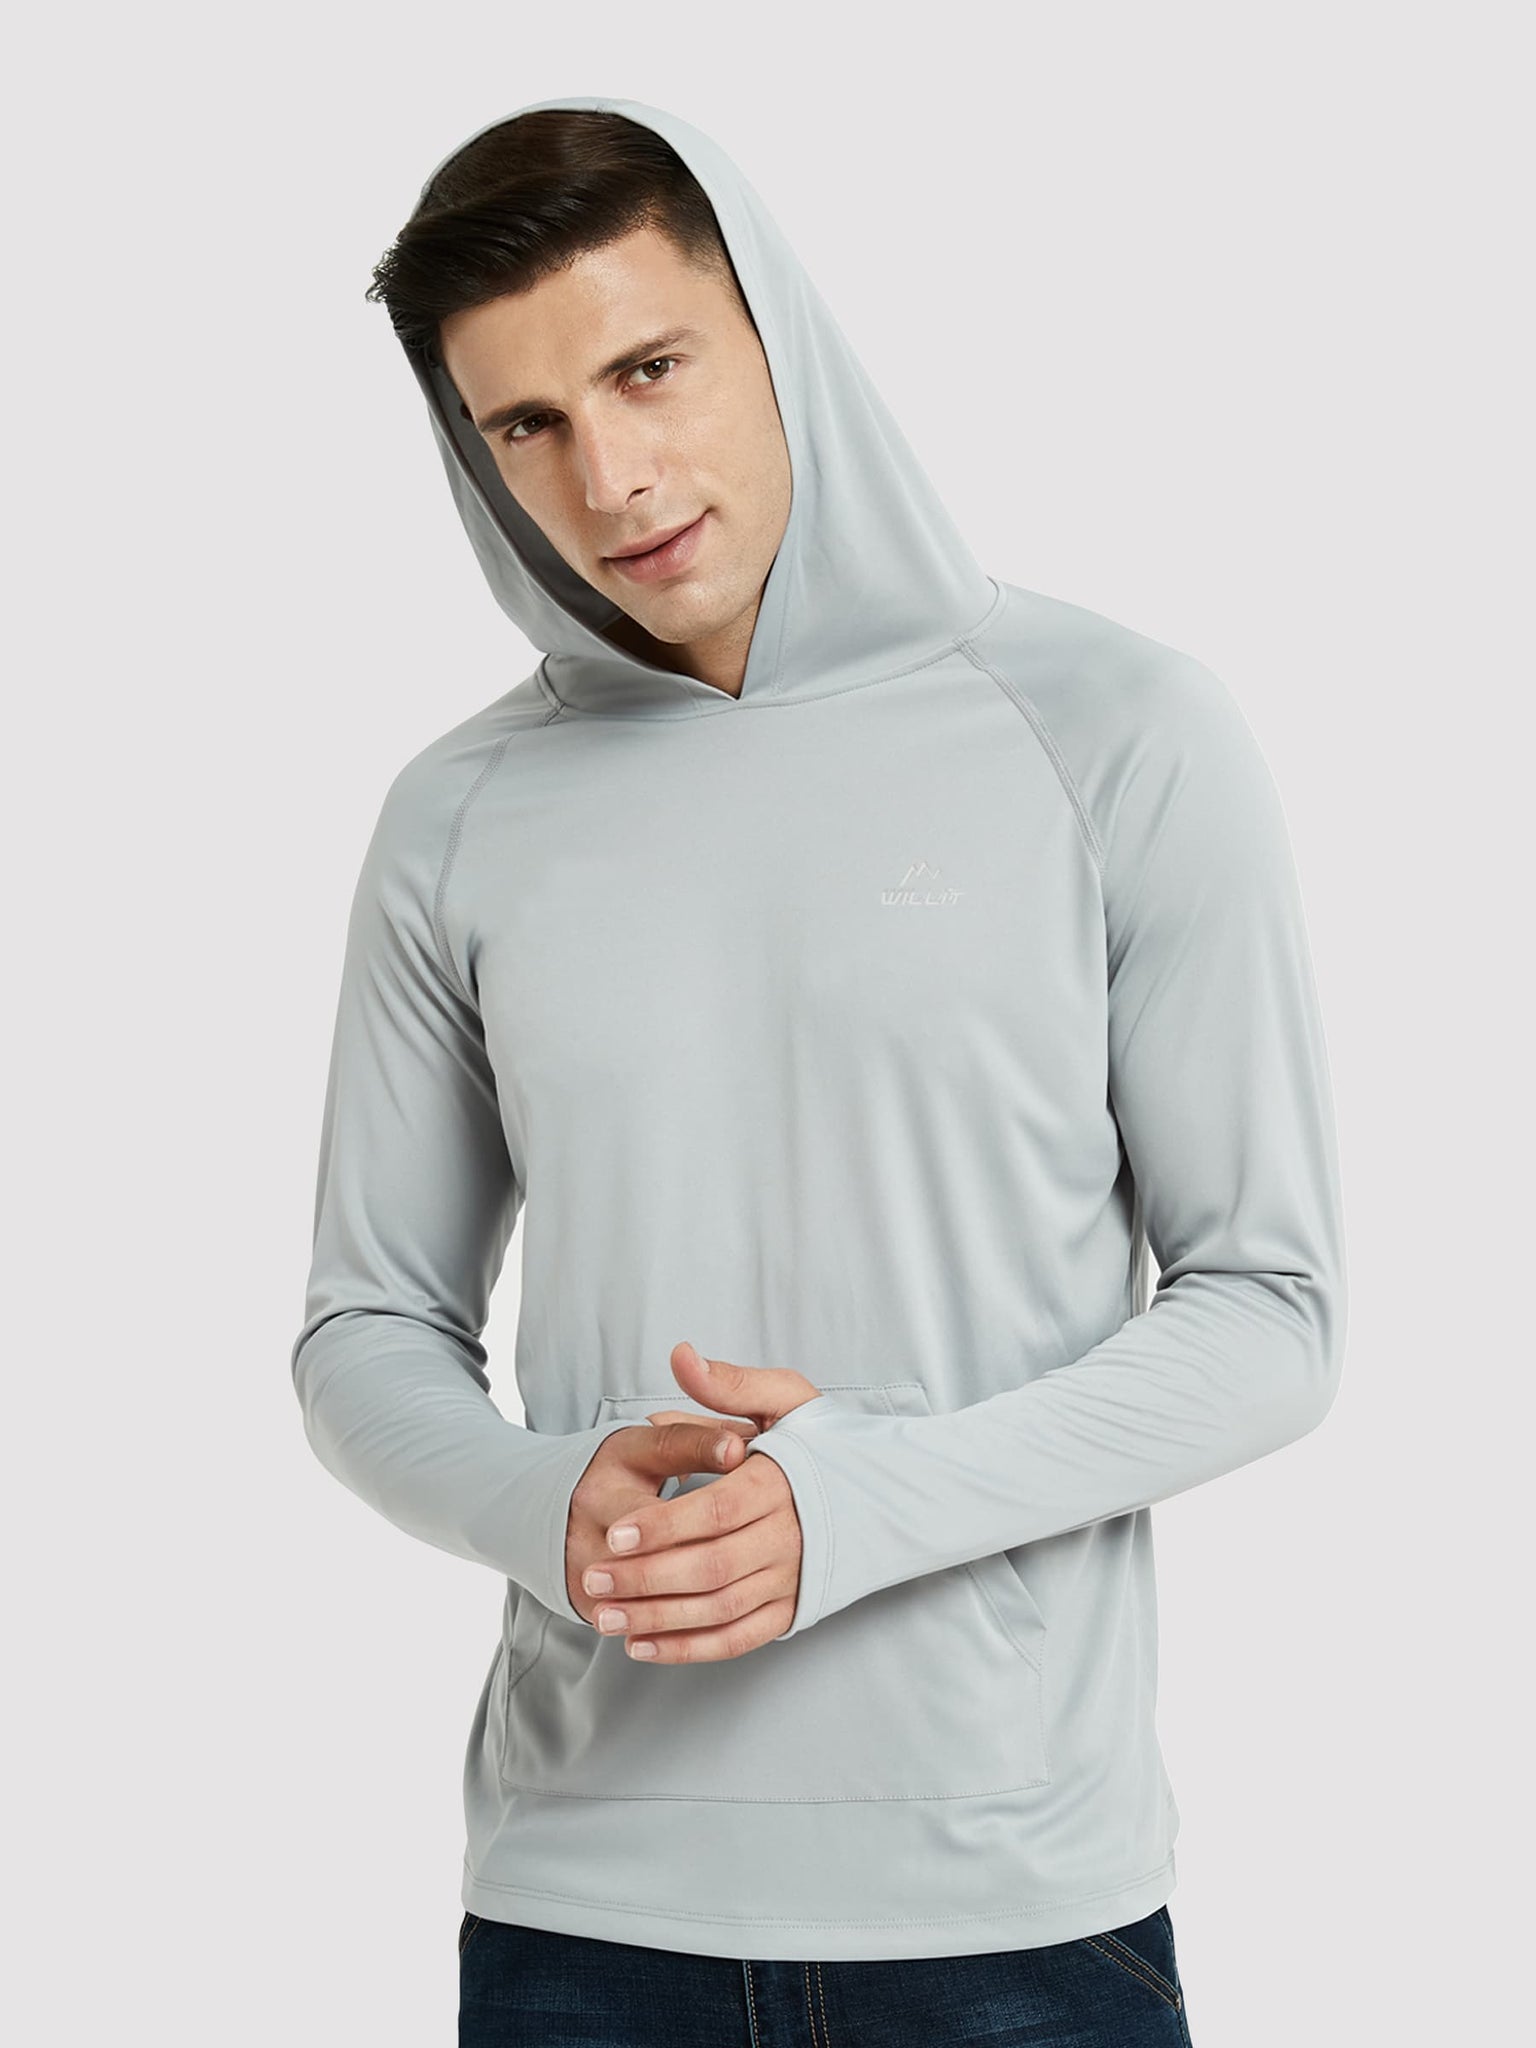 Men's Sun Protection Long Sleeve Shirts_Gray_model2